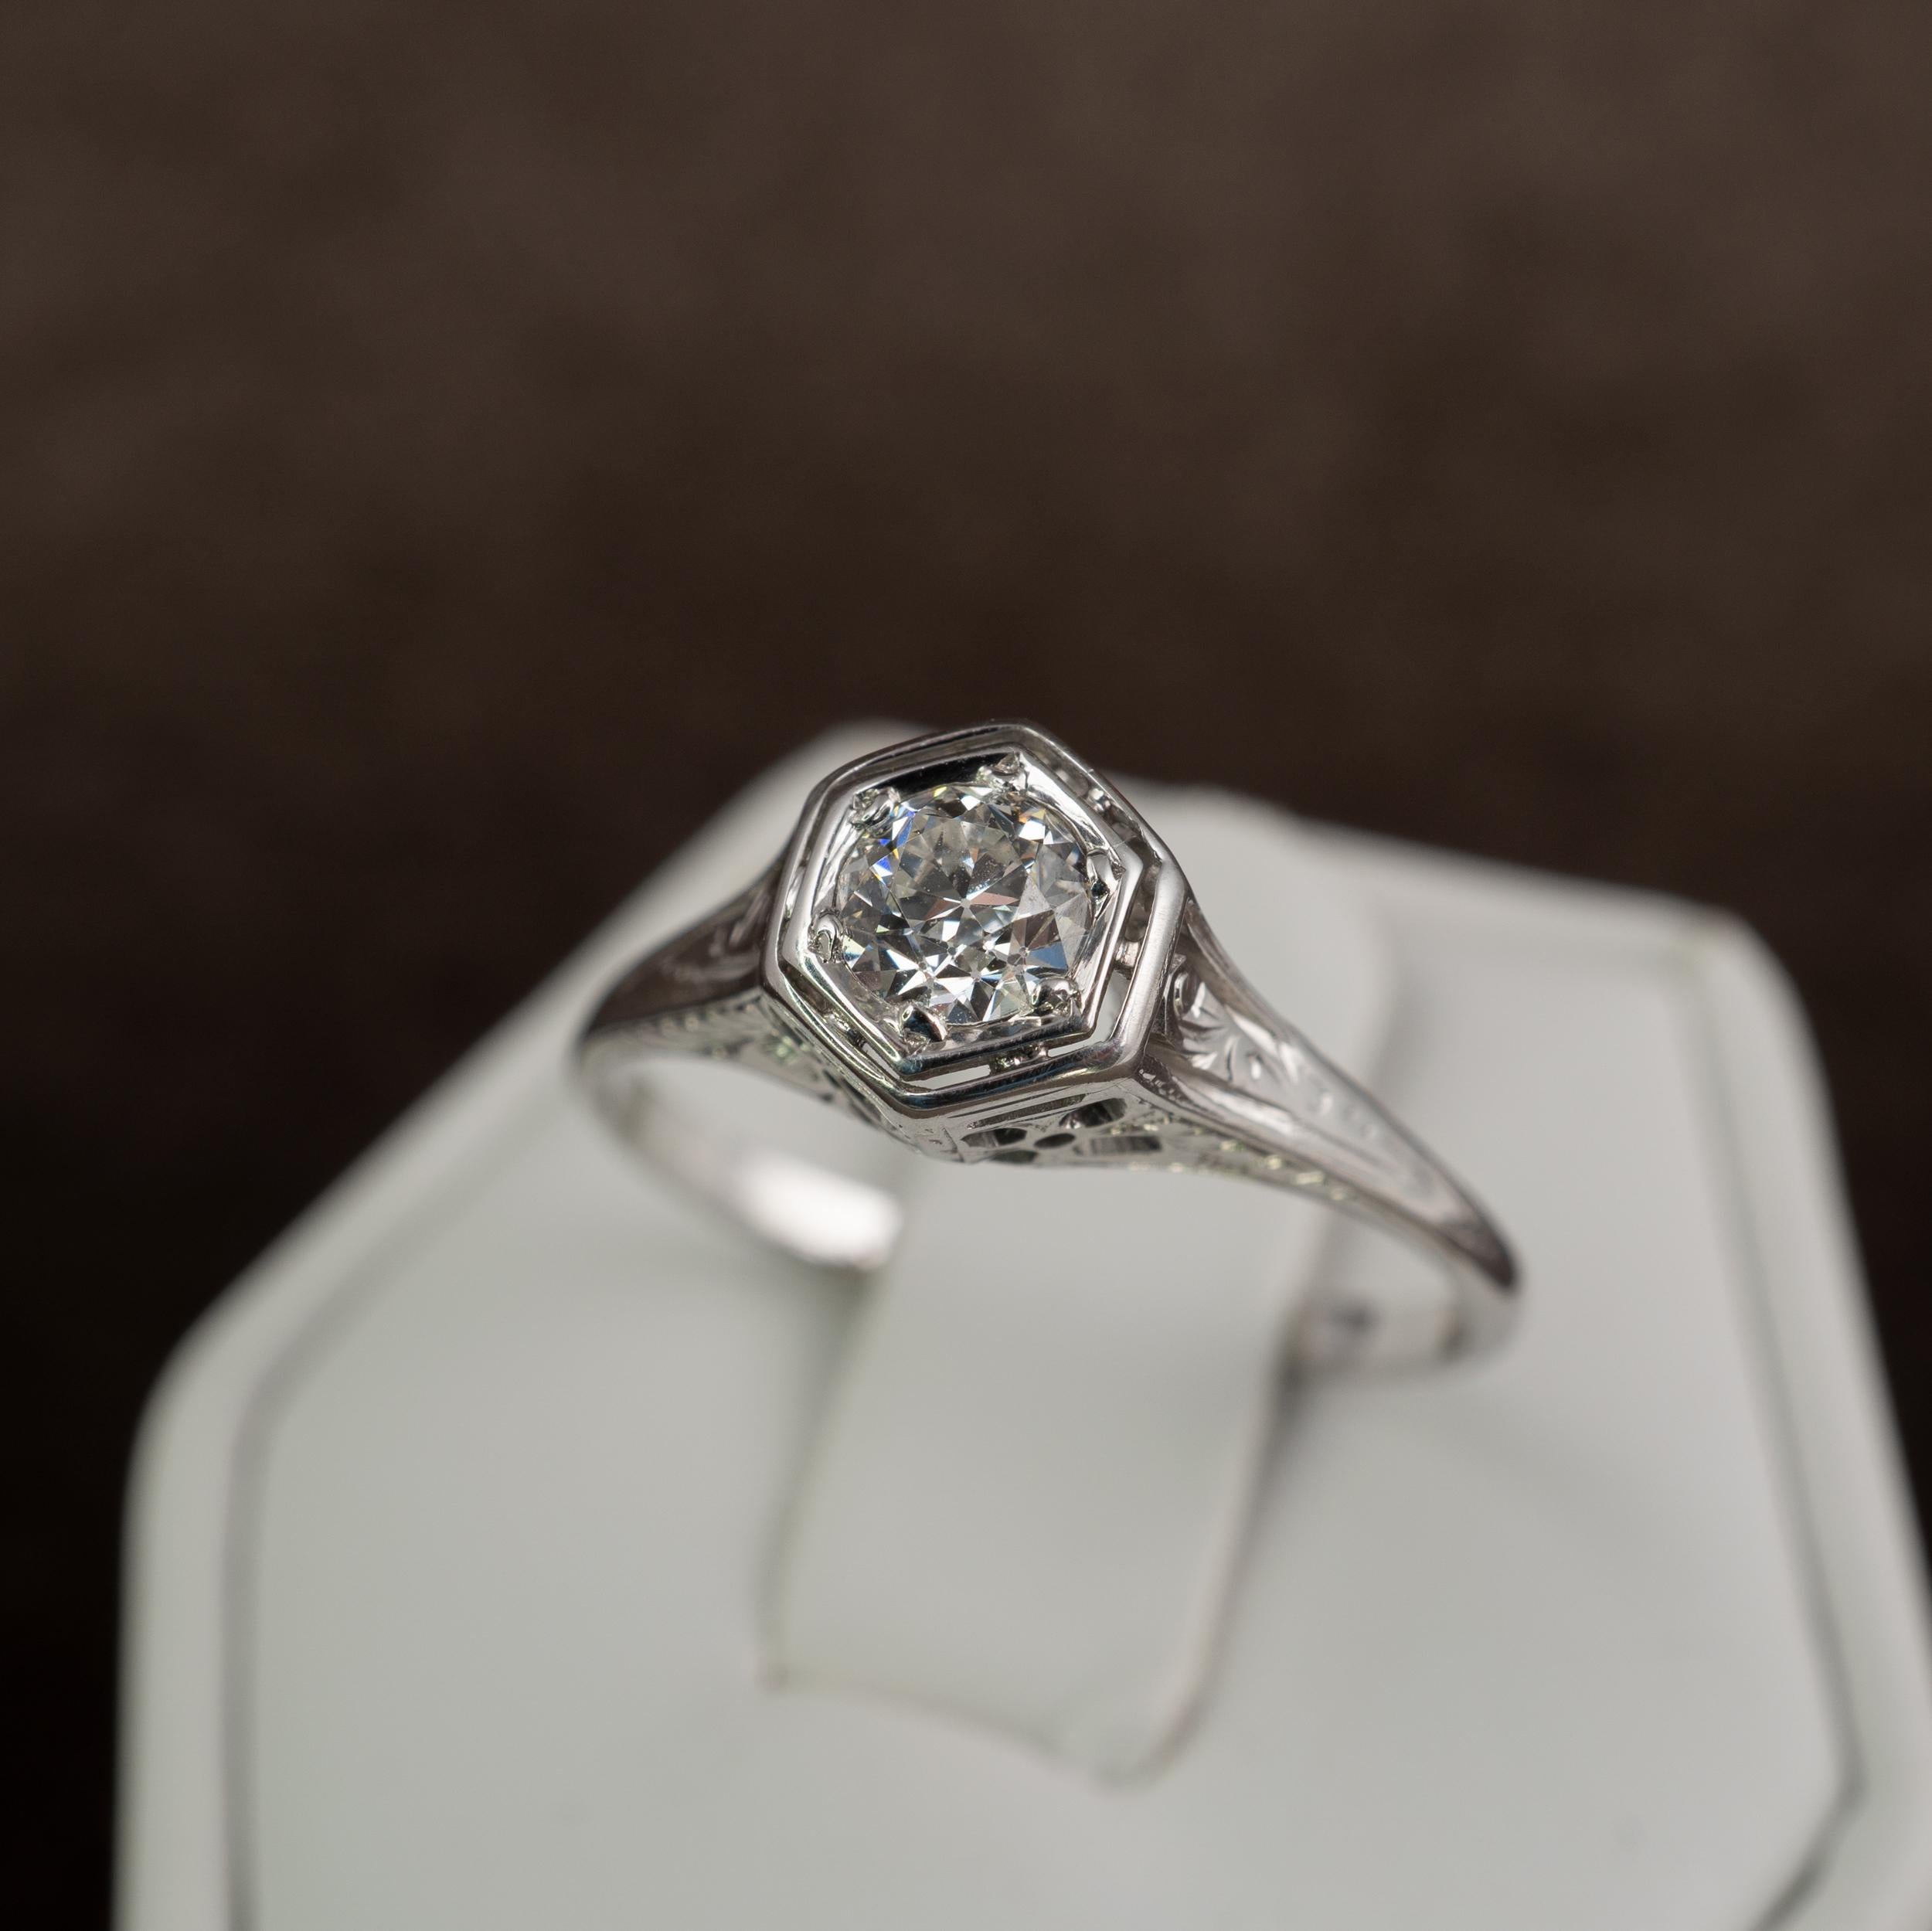 50 ct diamond ring